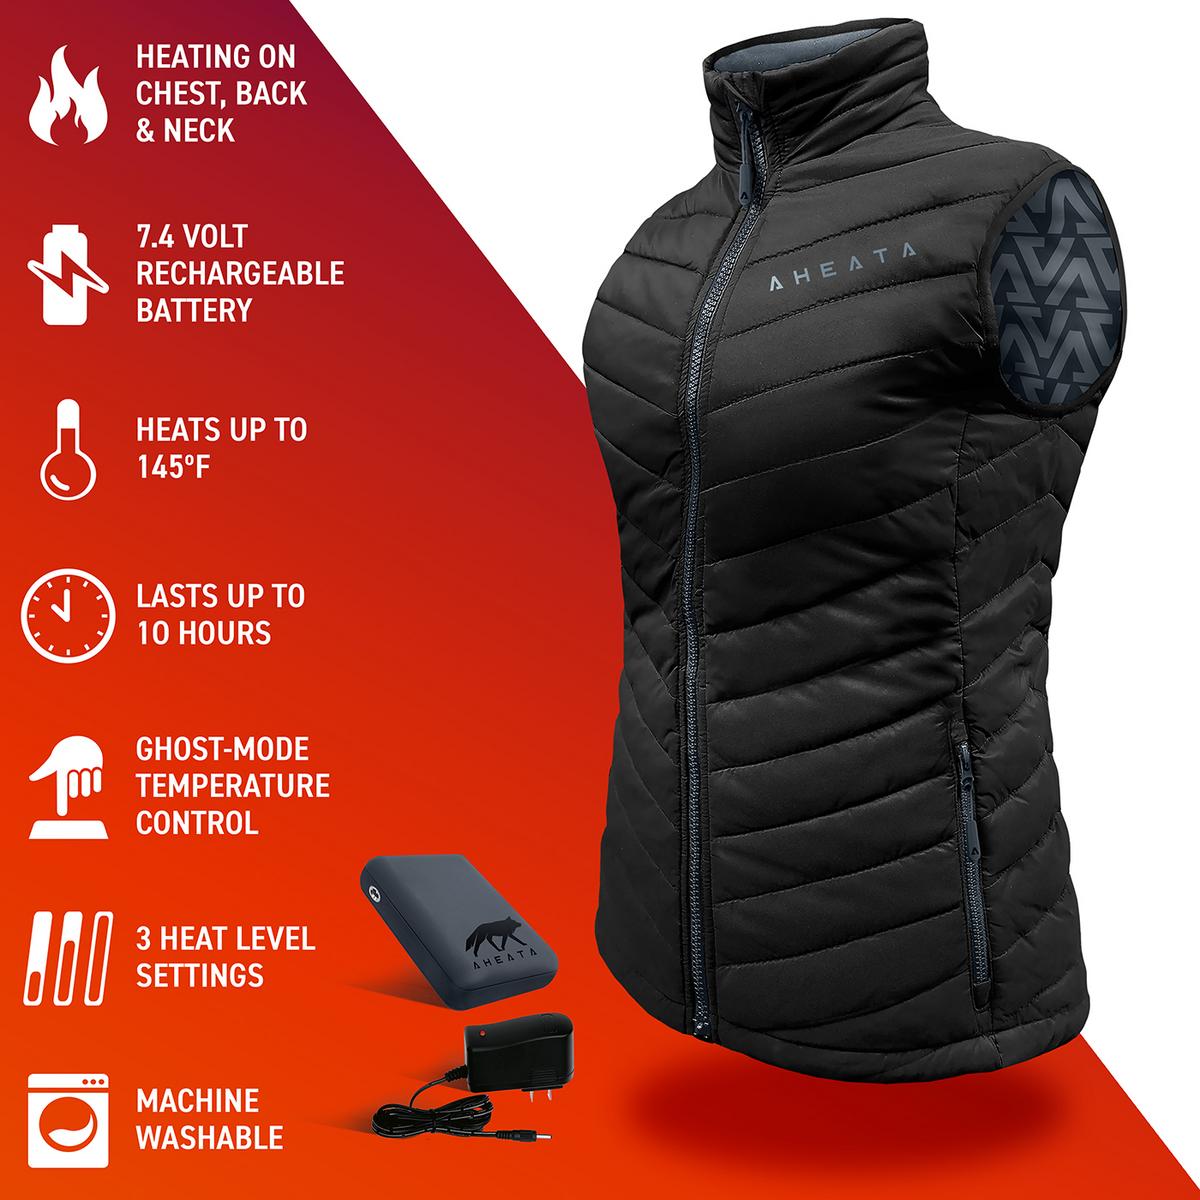 Aheata 7V Women's Insulated Puffer Battery Heated Vest - Info